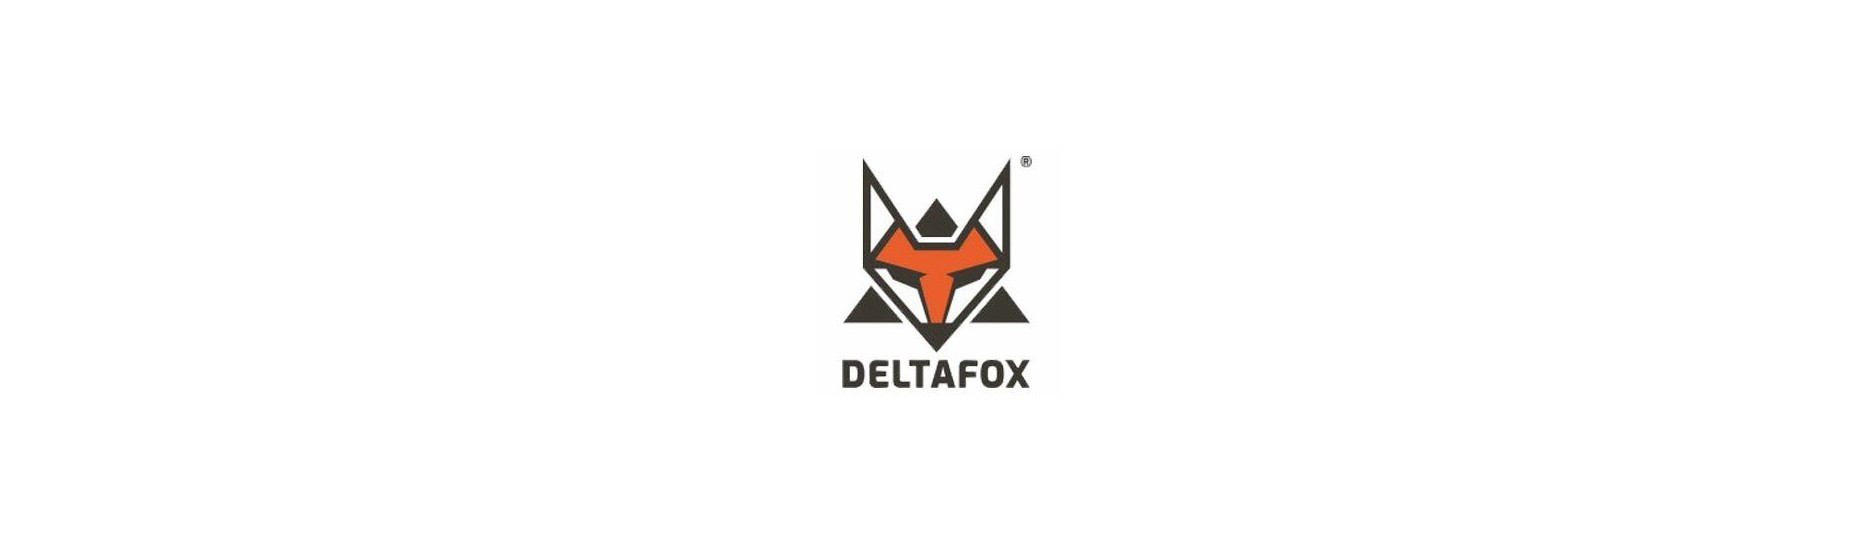 DELTAFOX